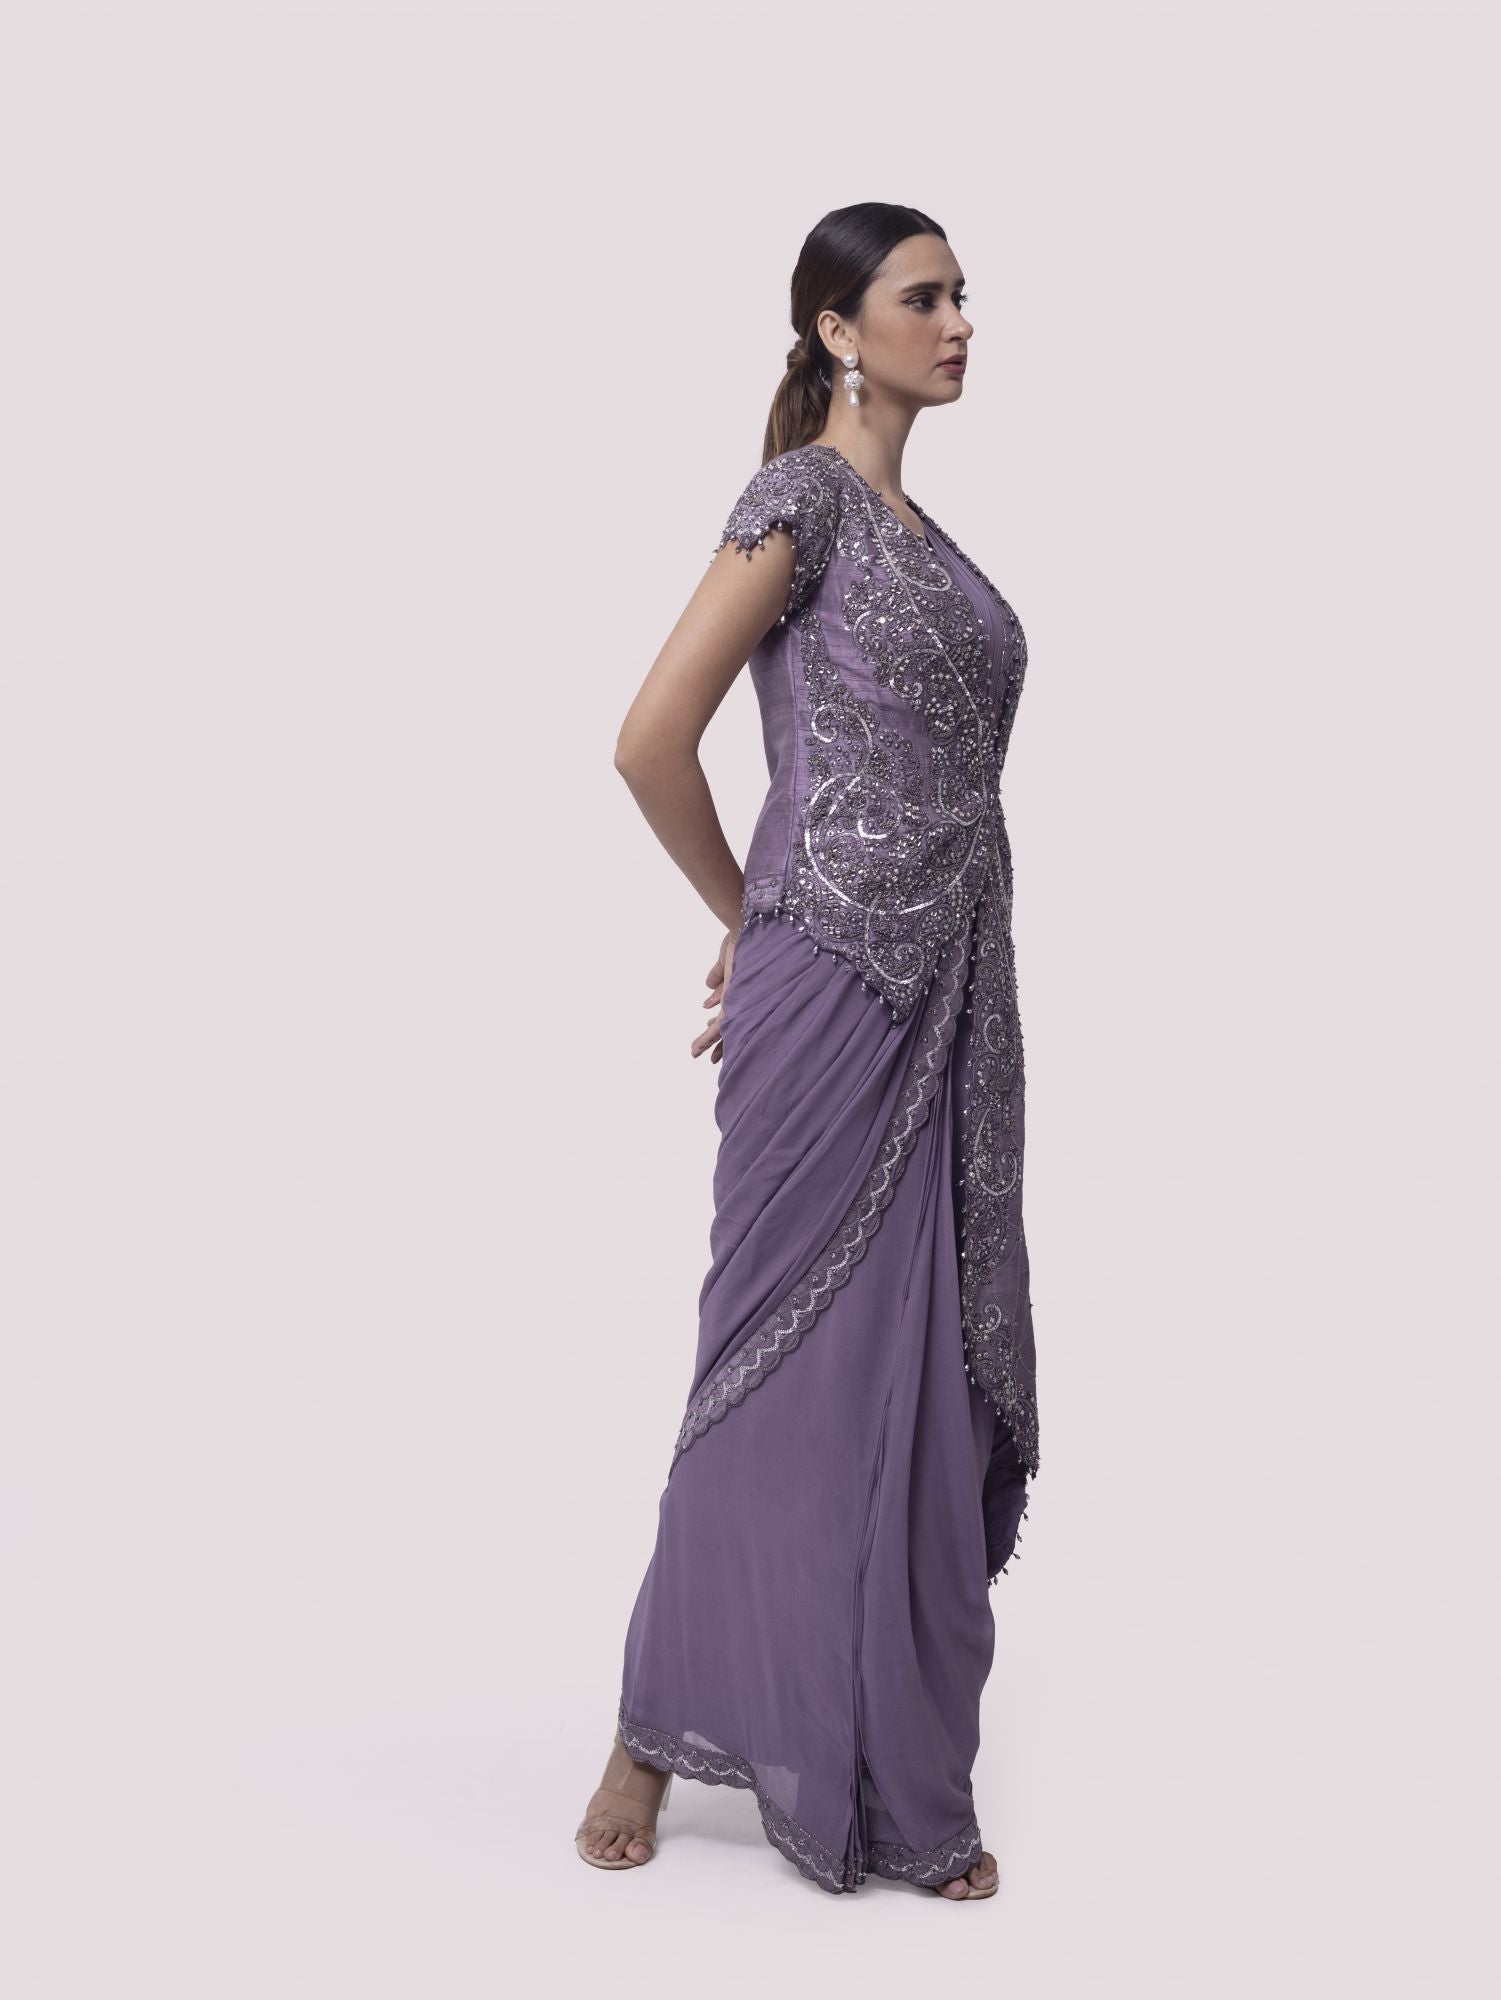 Pre Draped Saree Design For Wedding Shopping at Reasonable Price :  u/freshlookfashioncom